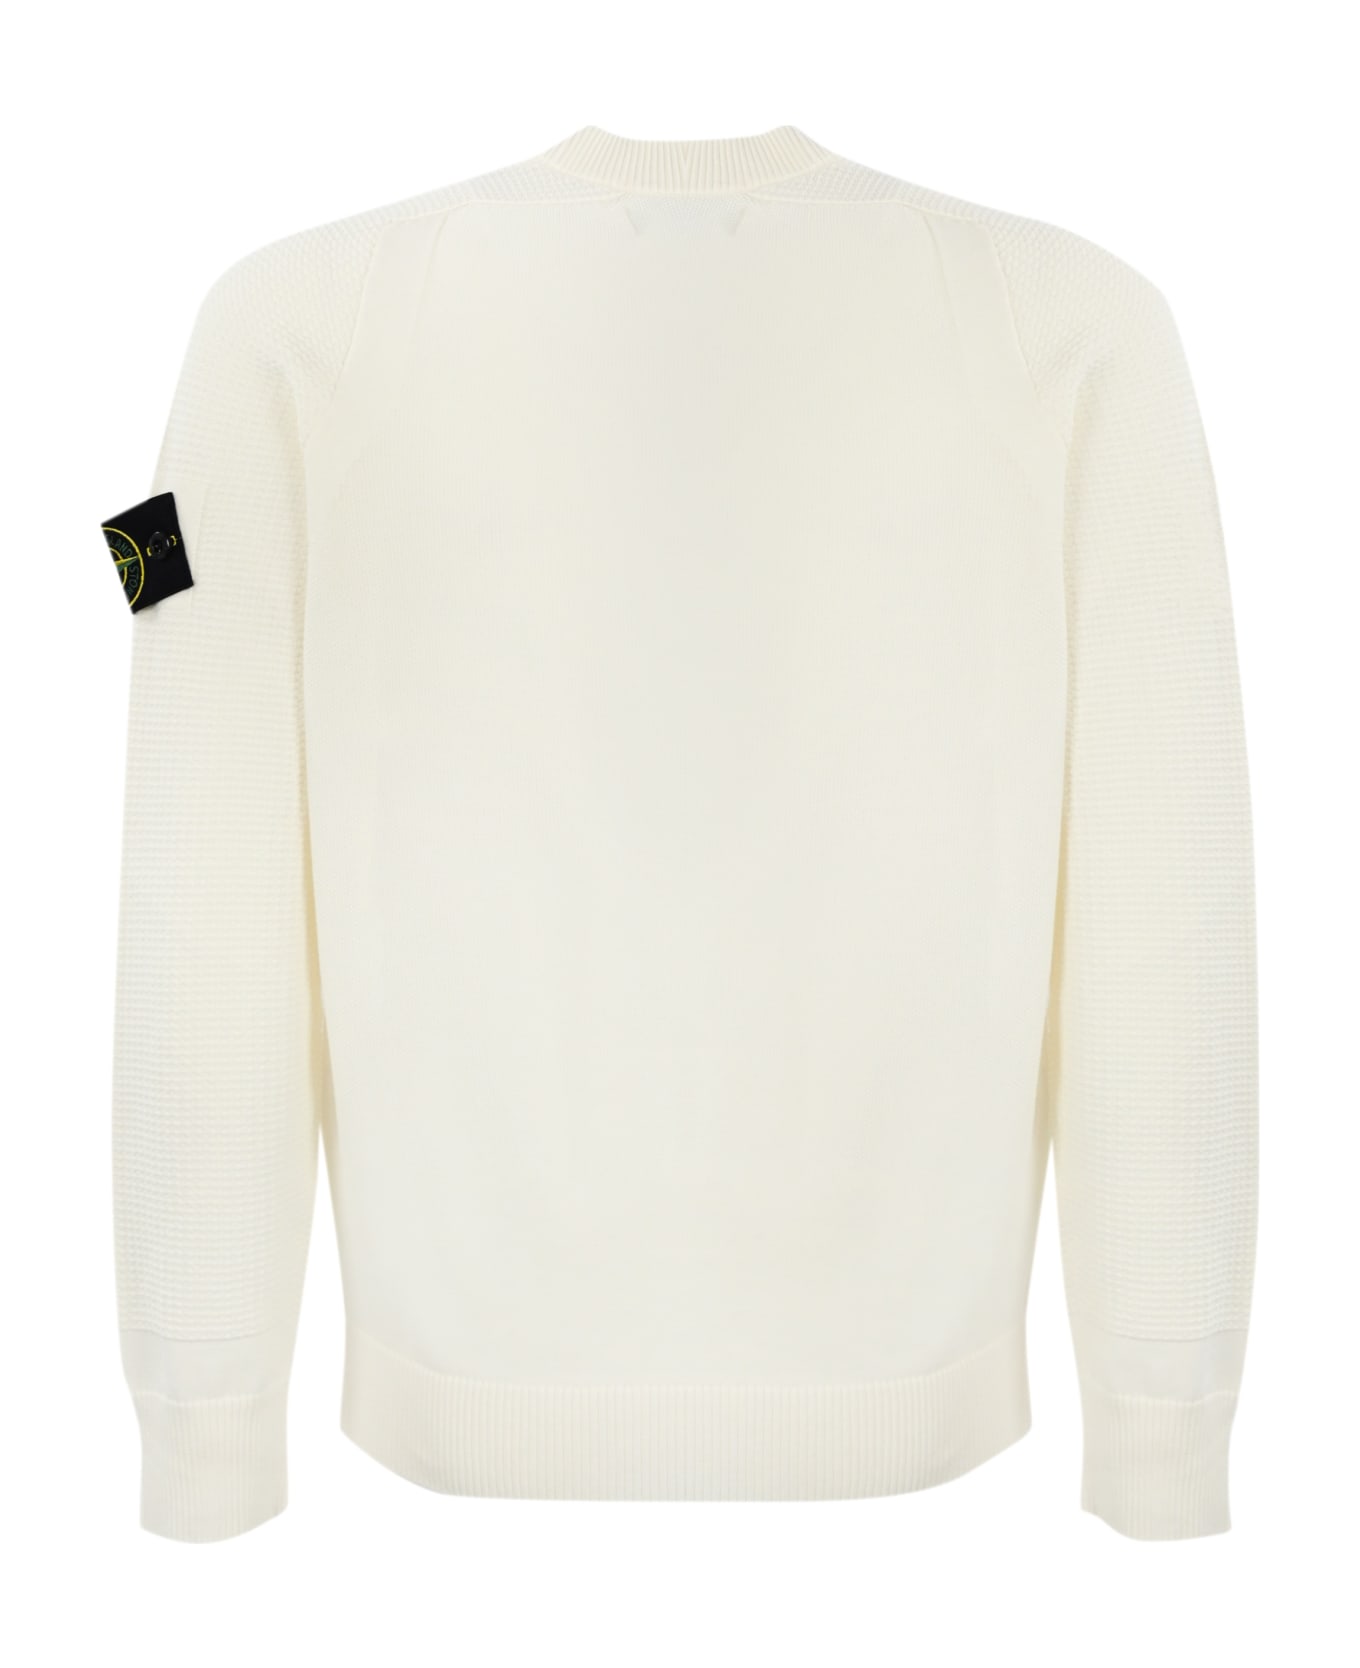 Stone Island Cotton Sweater - White